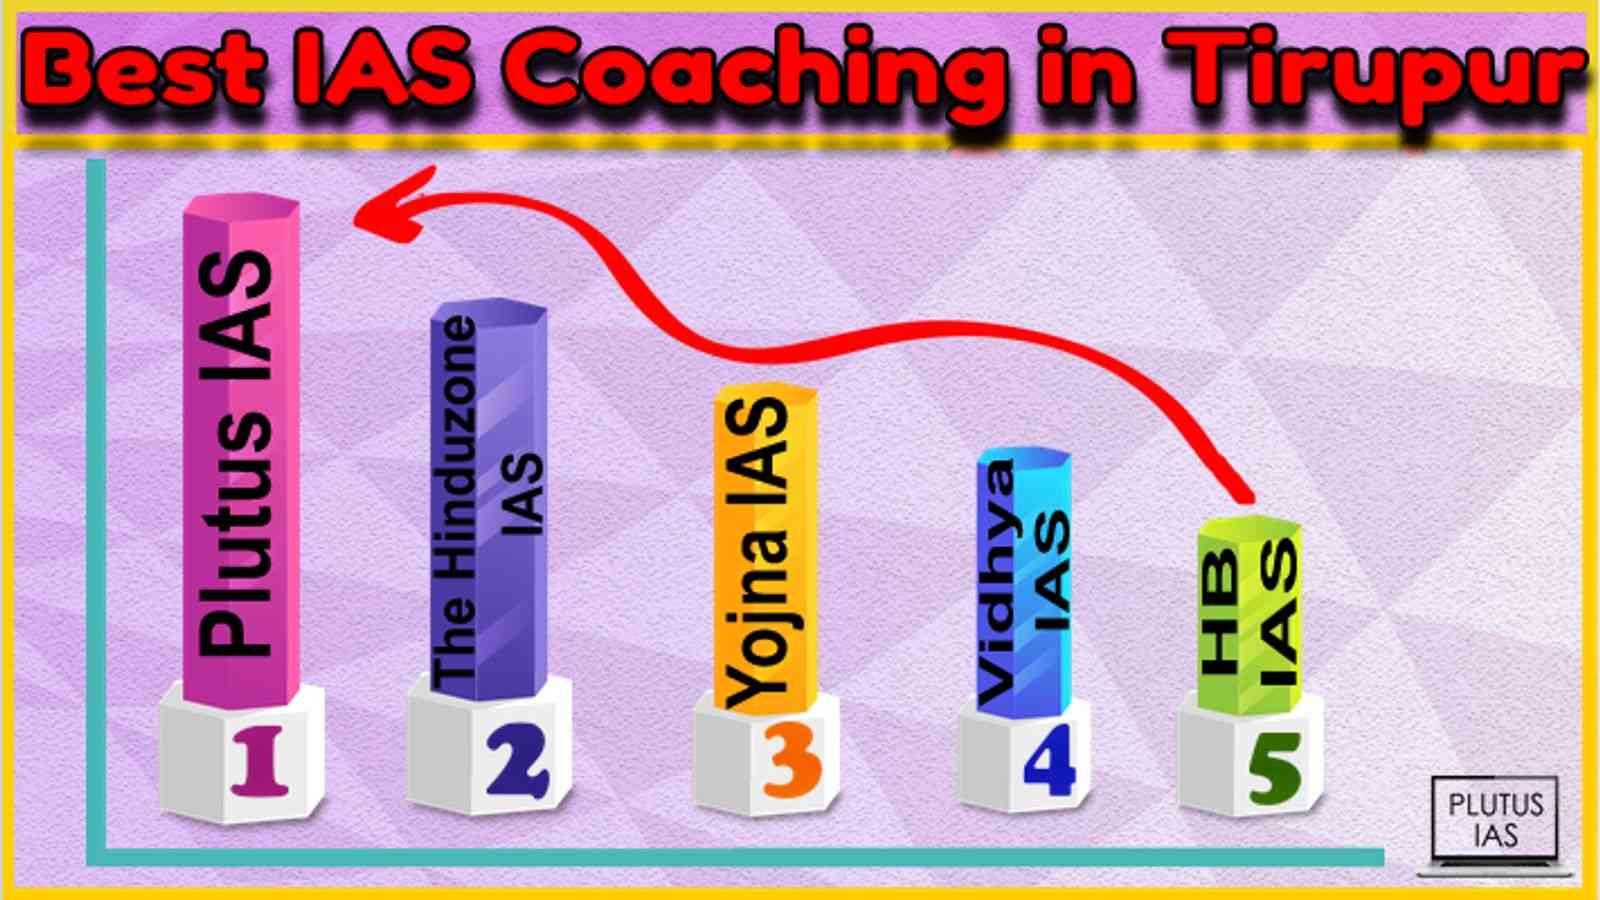 Best IAS Coaching in Tirupur